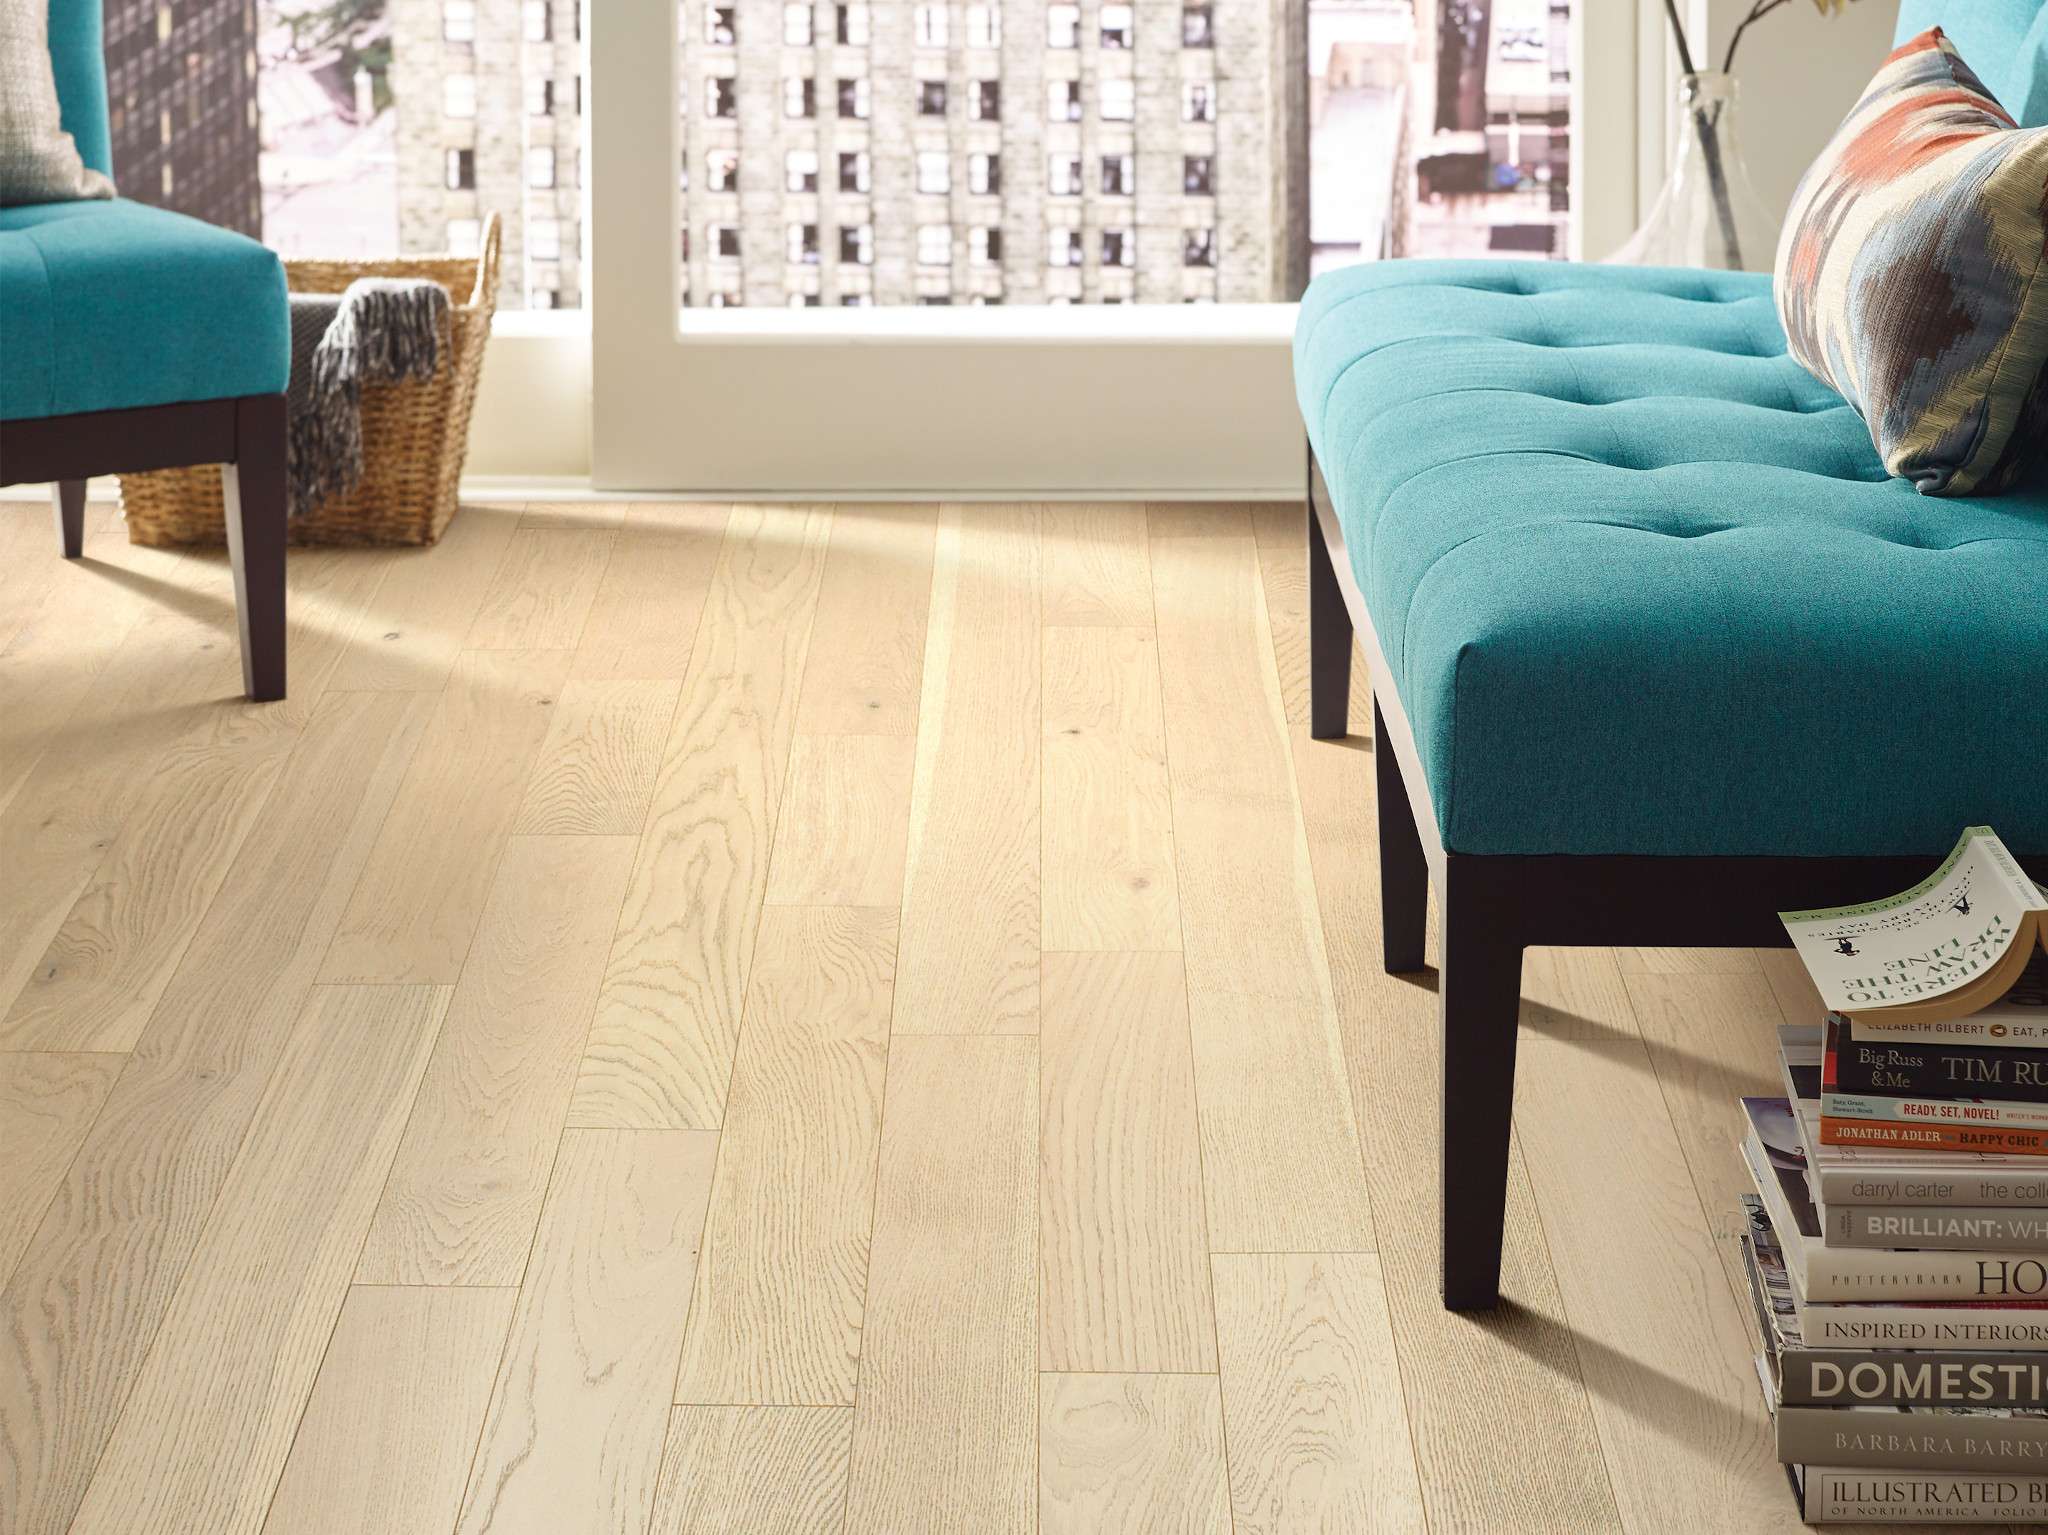 Empire Oak Plank Sw583 Vanderbilt, Premium Engineered Hardwood Flooring